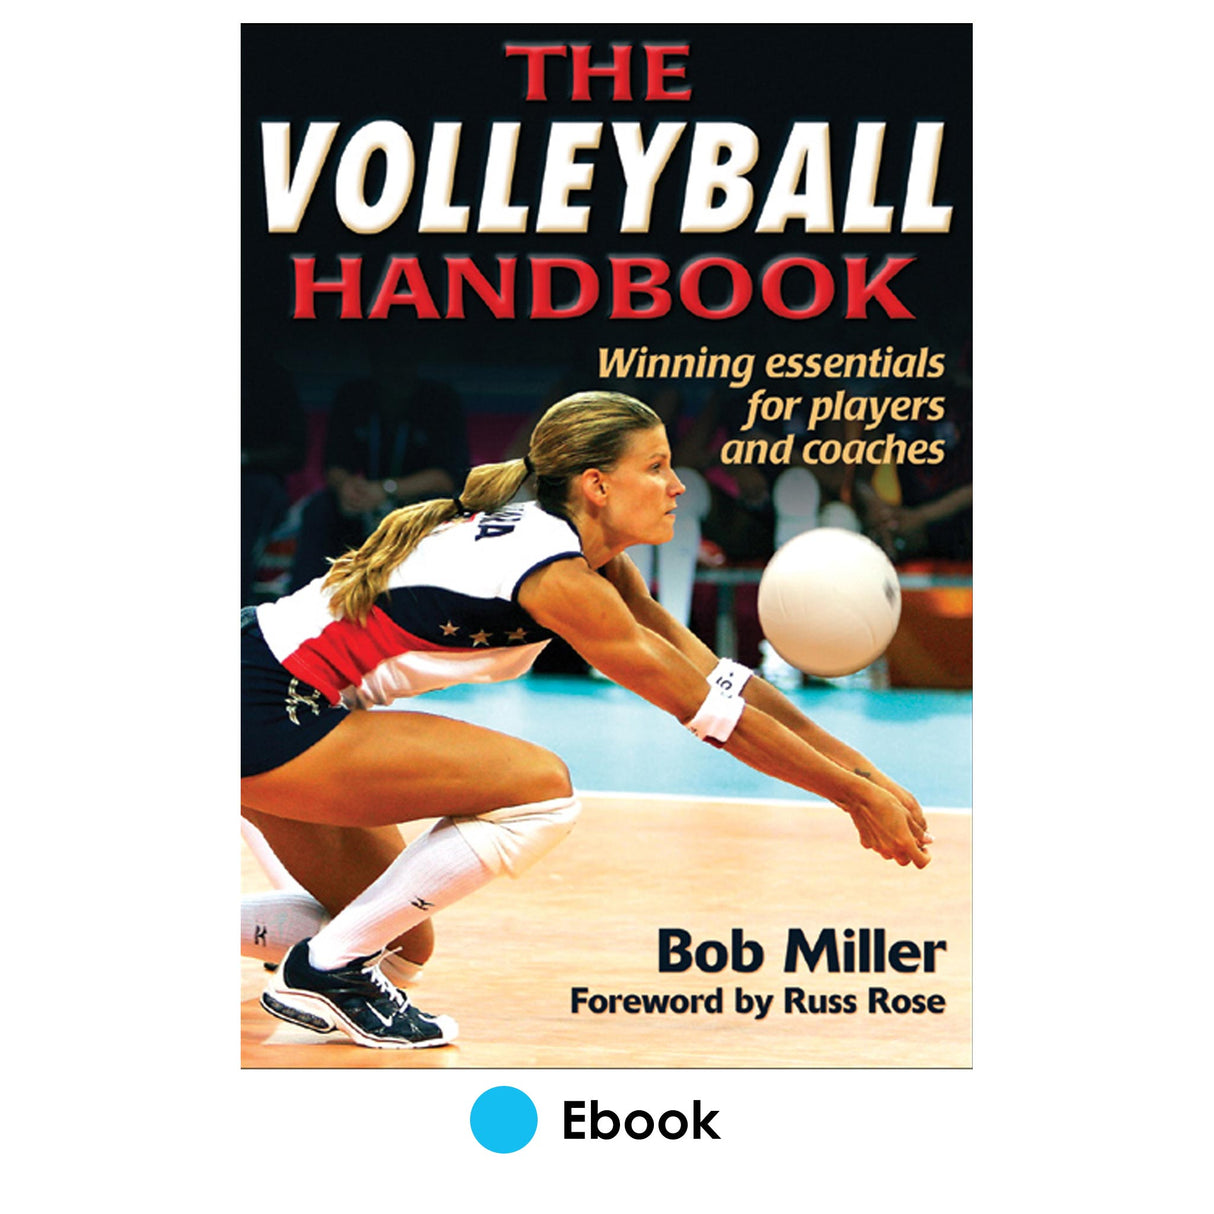 Volleyball Handbook PDF, The